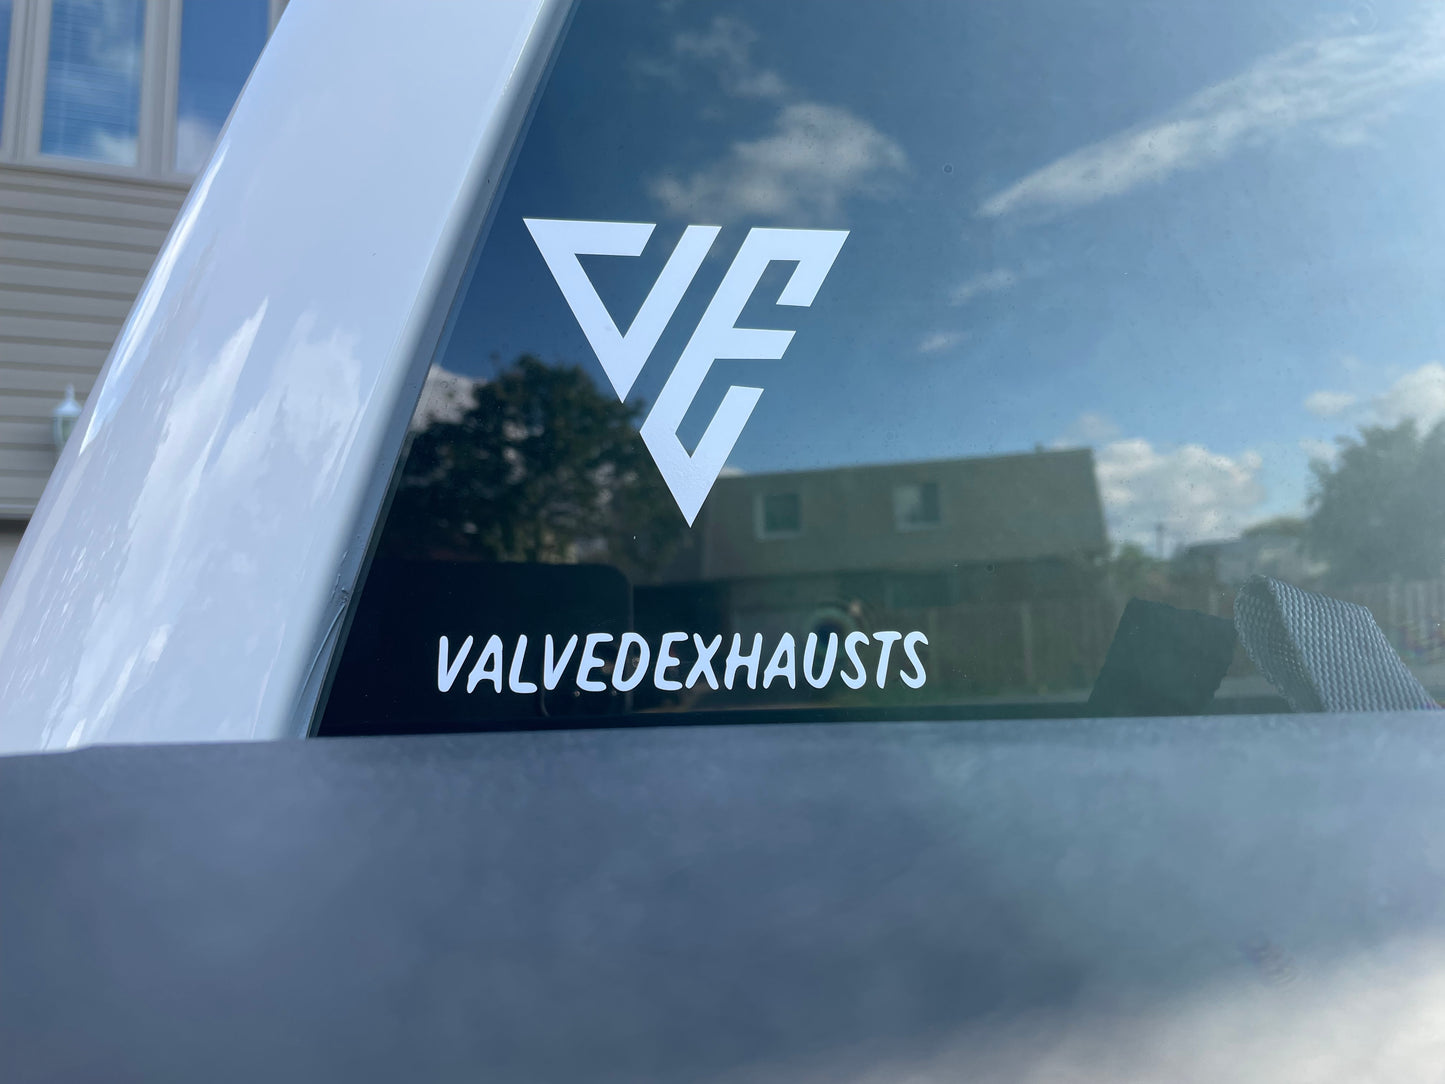 ValvedExhausts Stickers